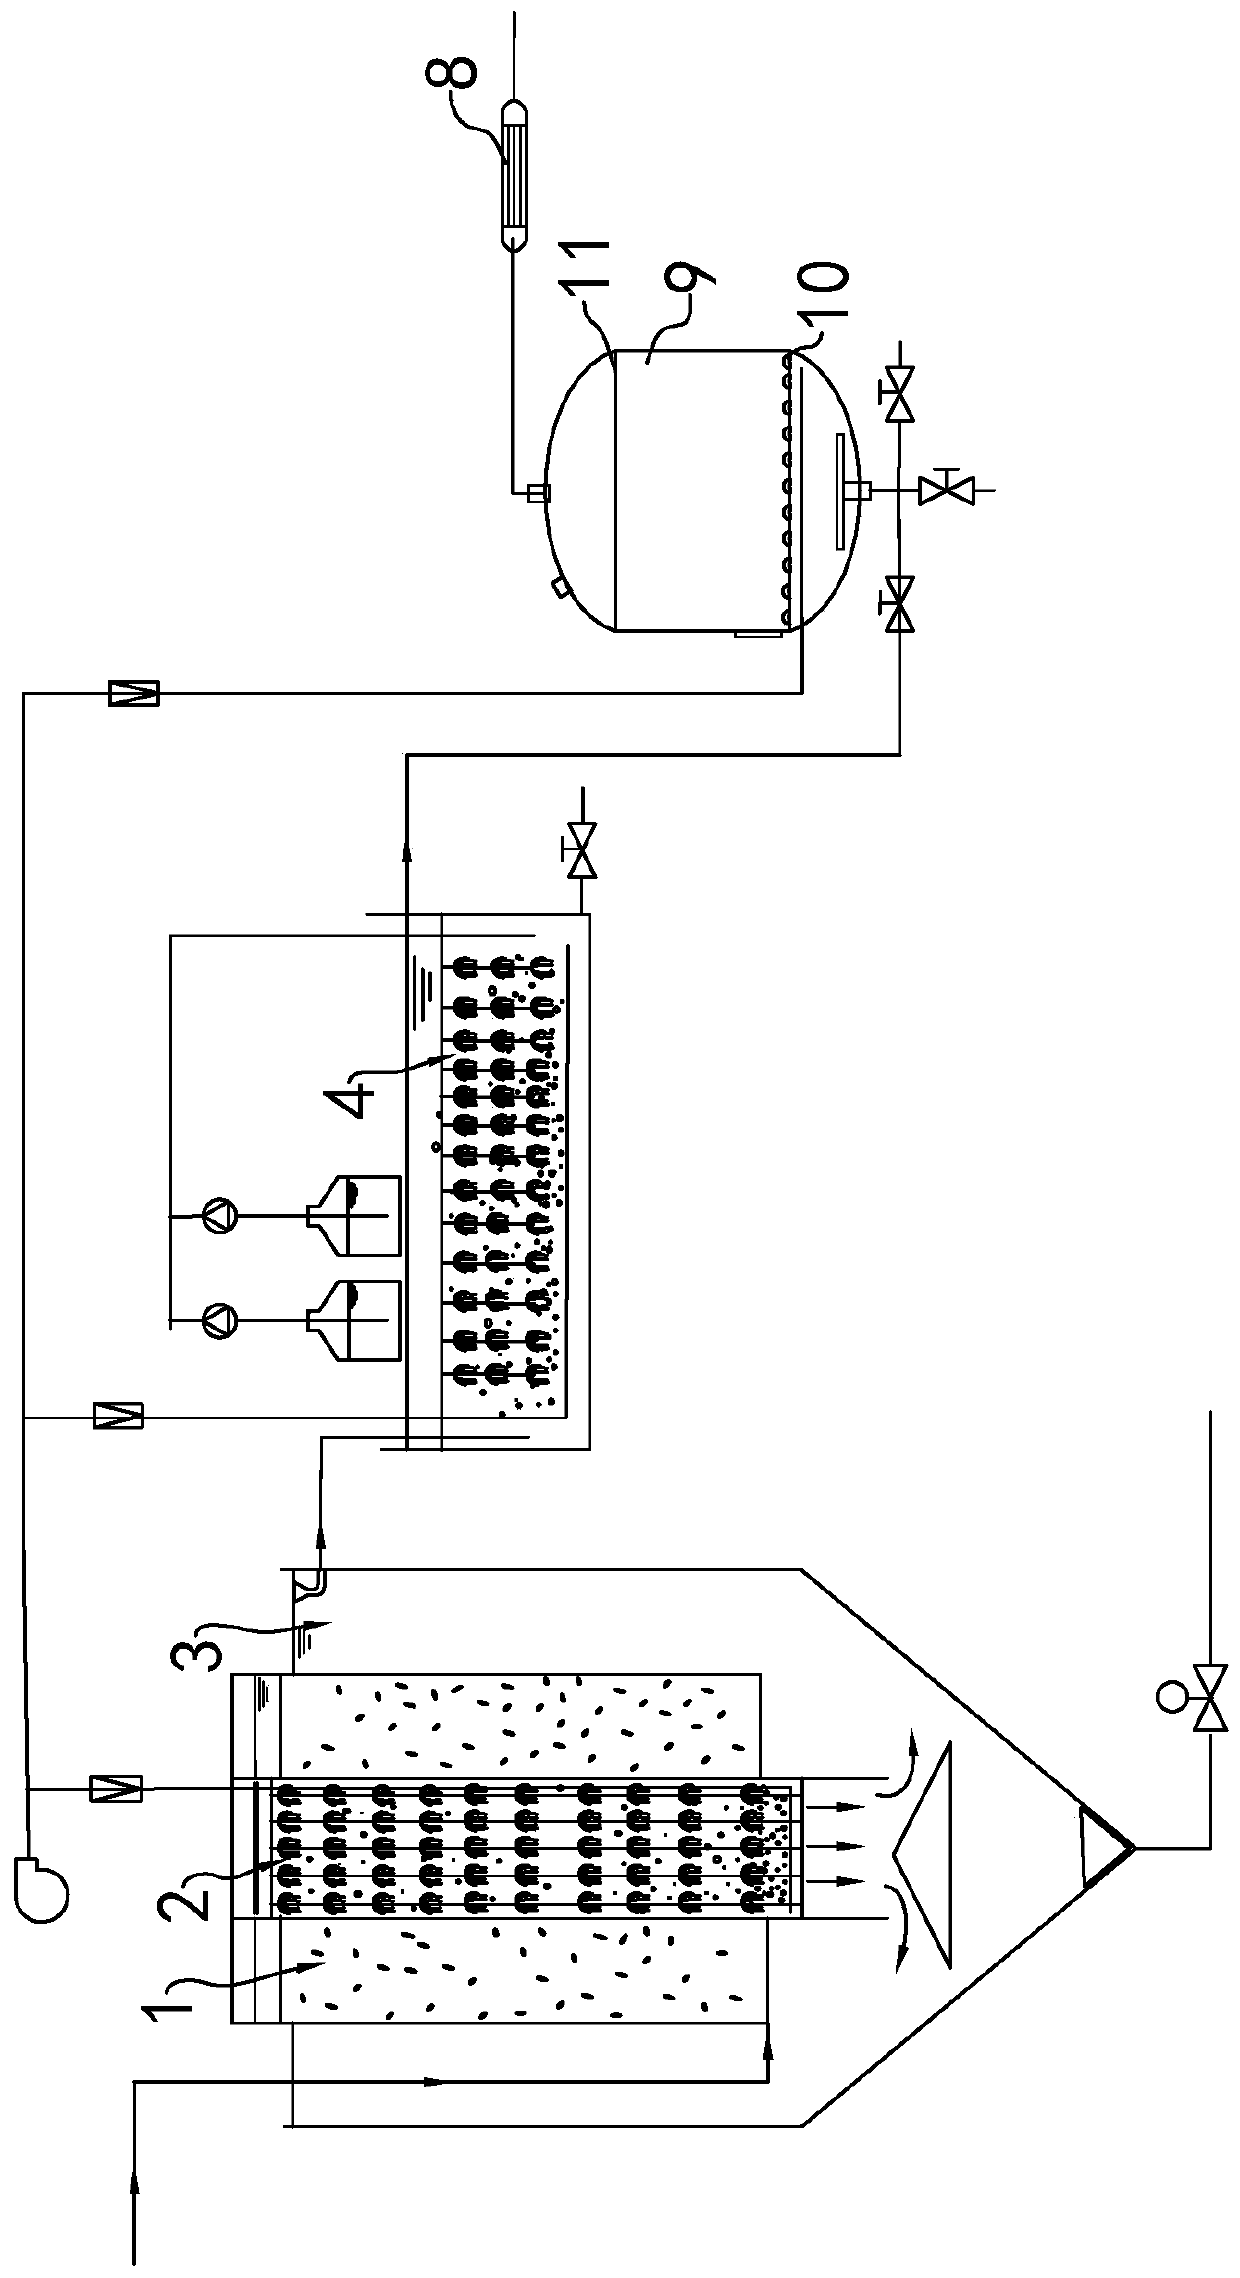 Nitrification-denitrification circulating water treatment method